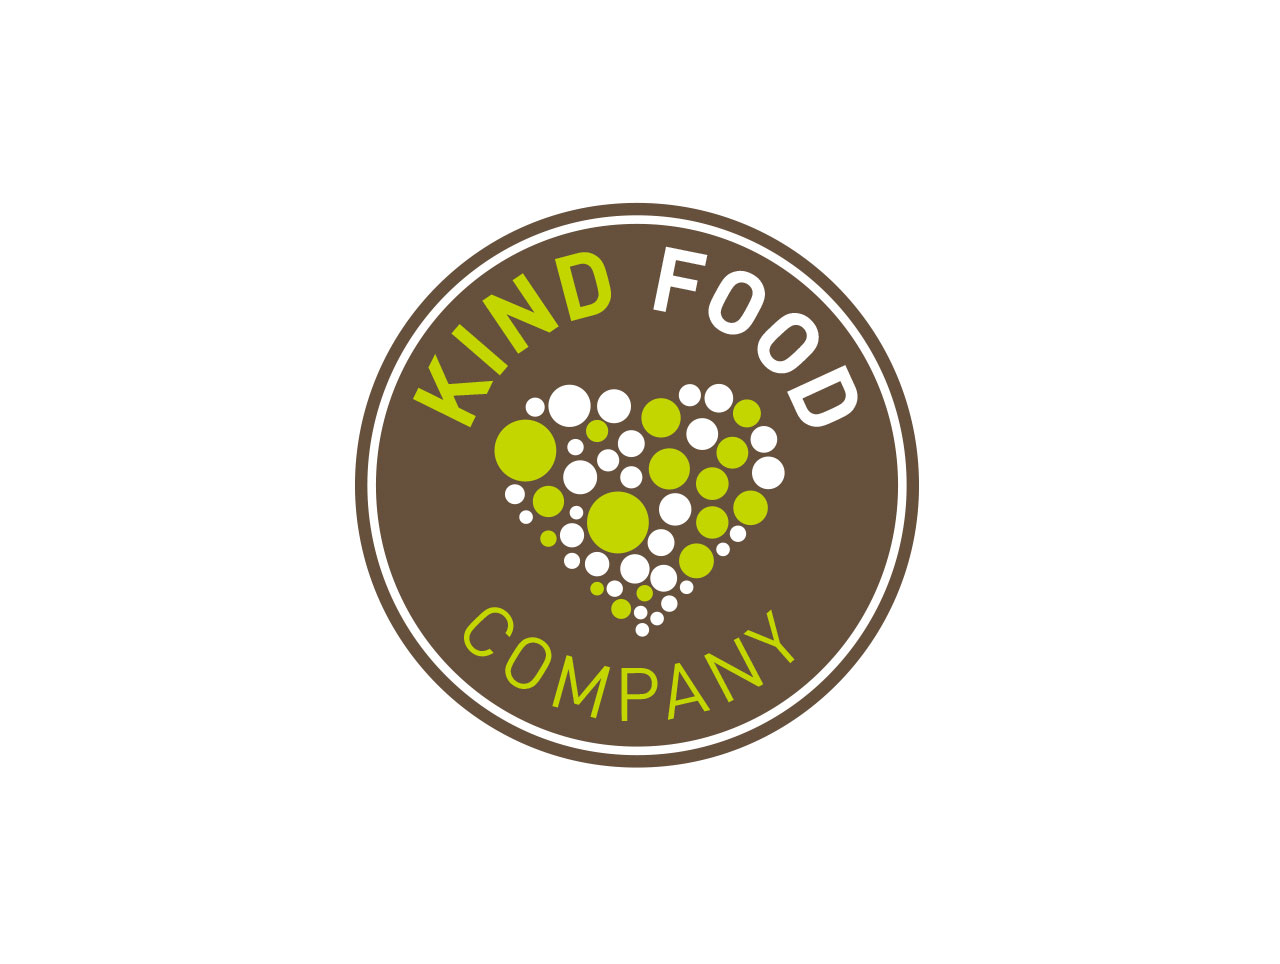 Kindway Food Company logo design